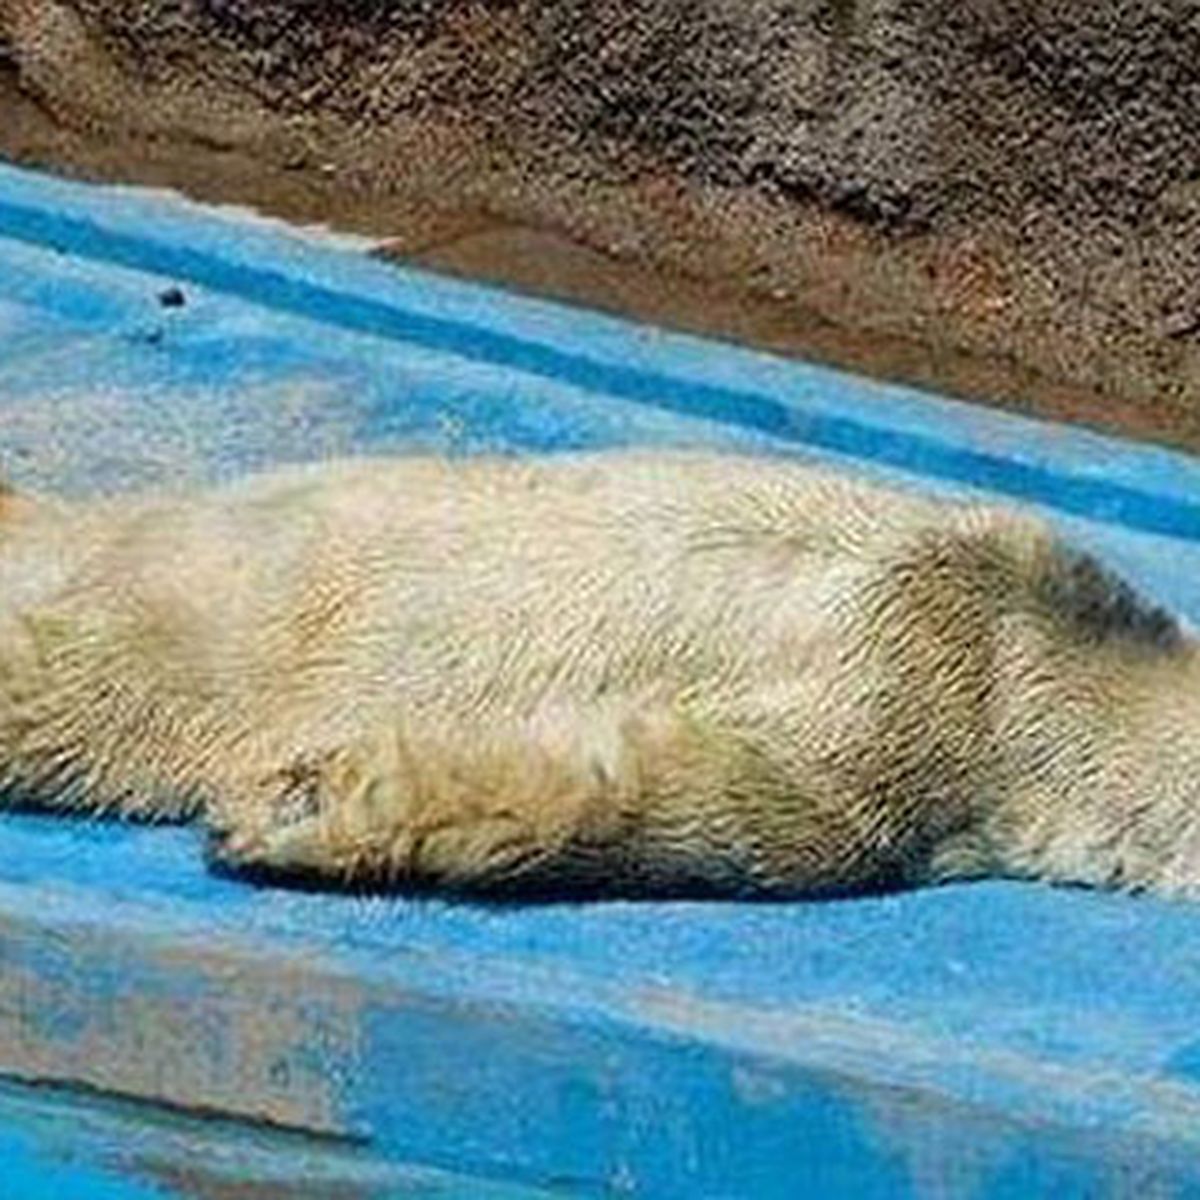 Polar bear 'world's saddest animal' - 9News